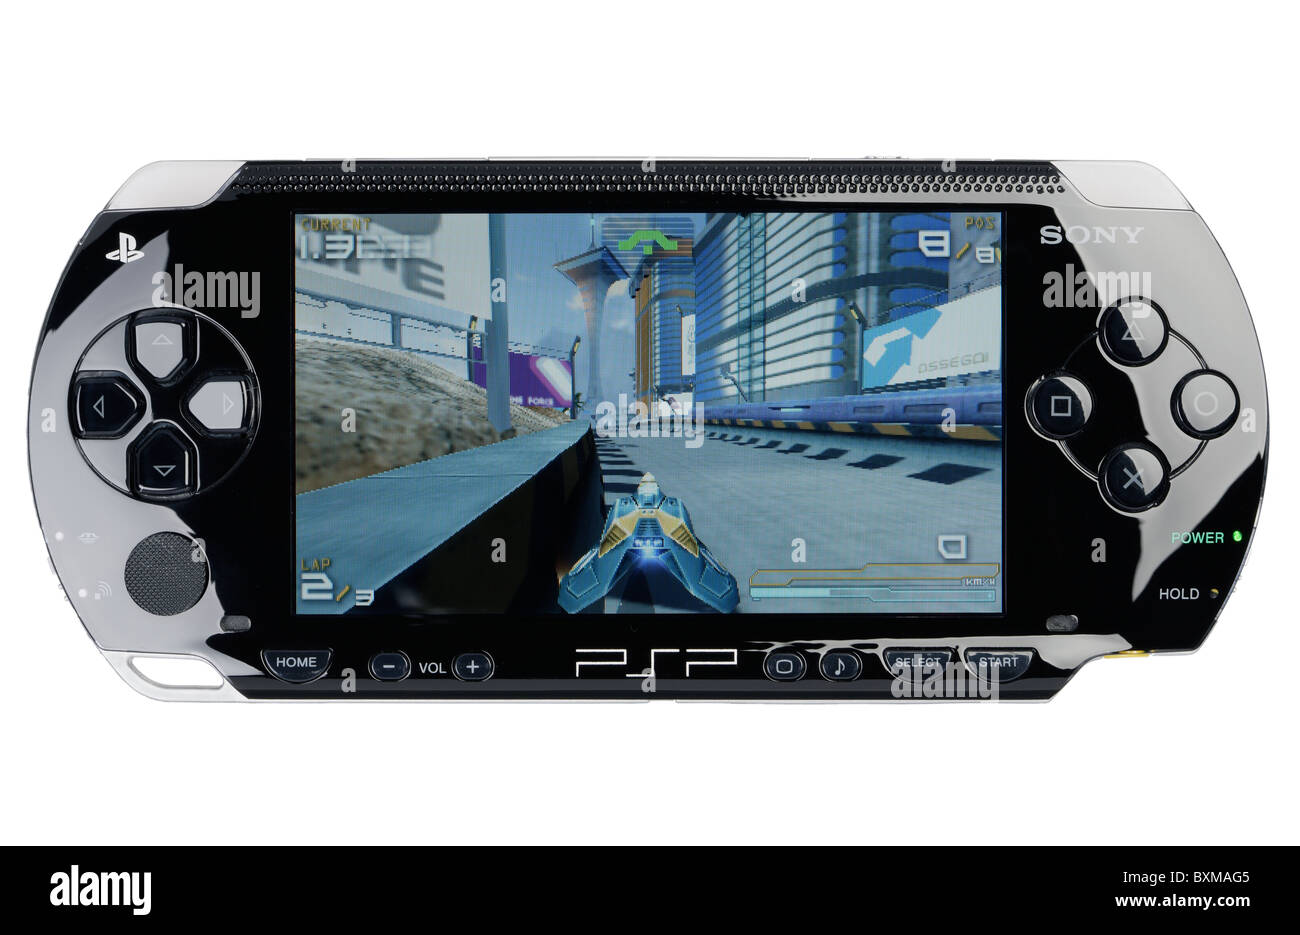 Sony Playstation Pocket giochi portatili computer Foto stock - Alamy